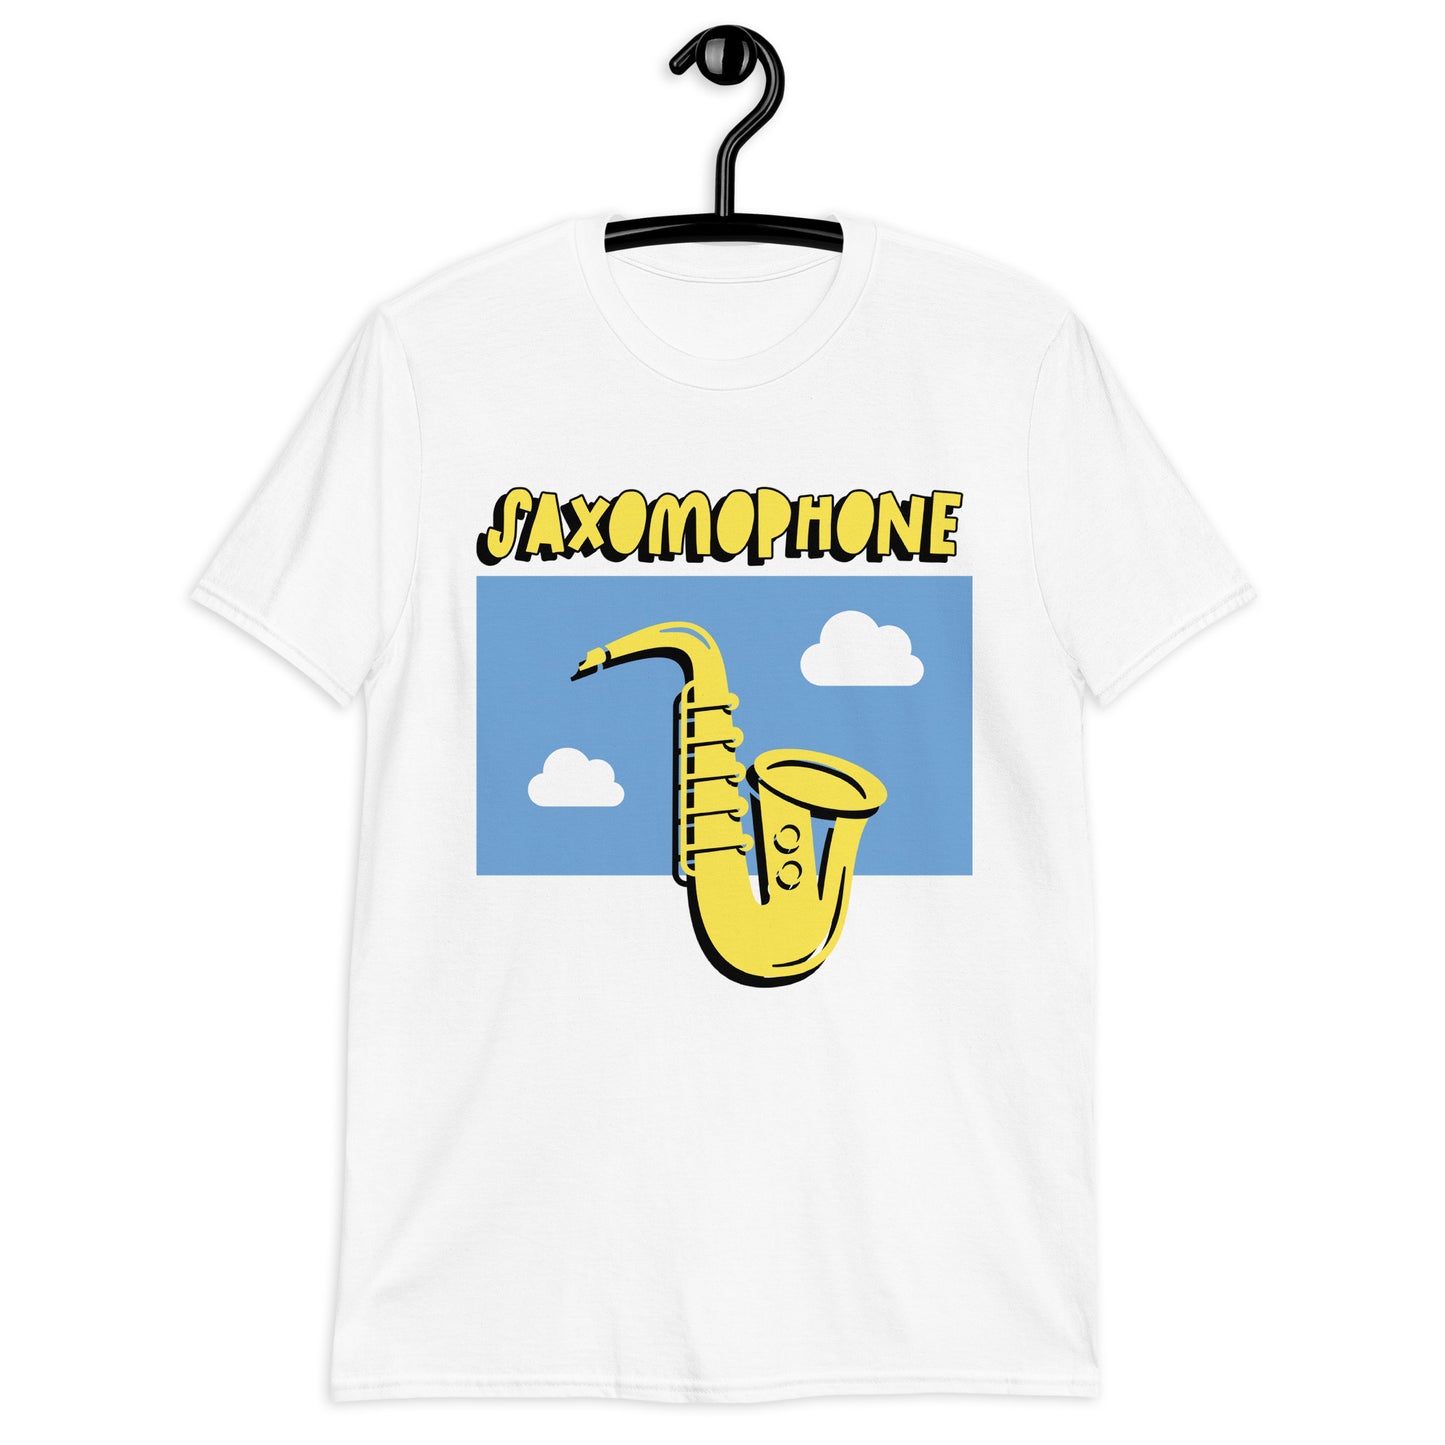 Saxomophone. Designed for the light Unisex T-Shirt